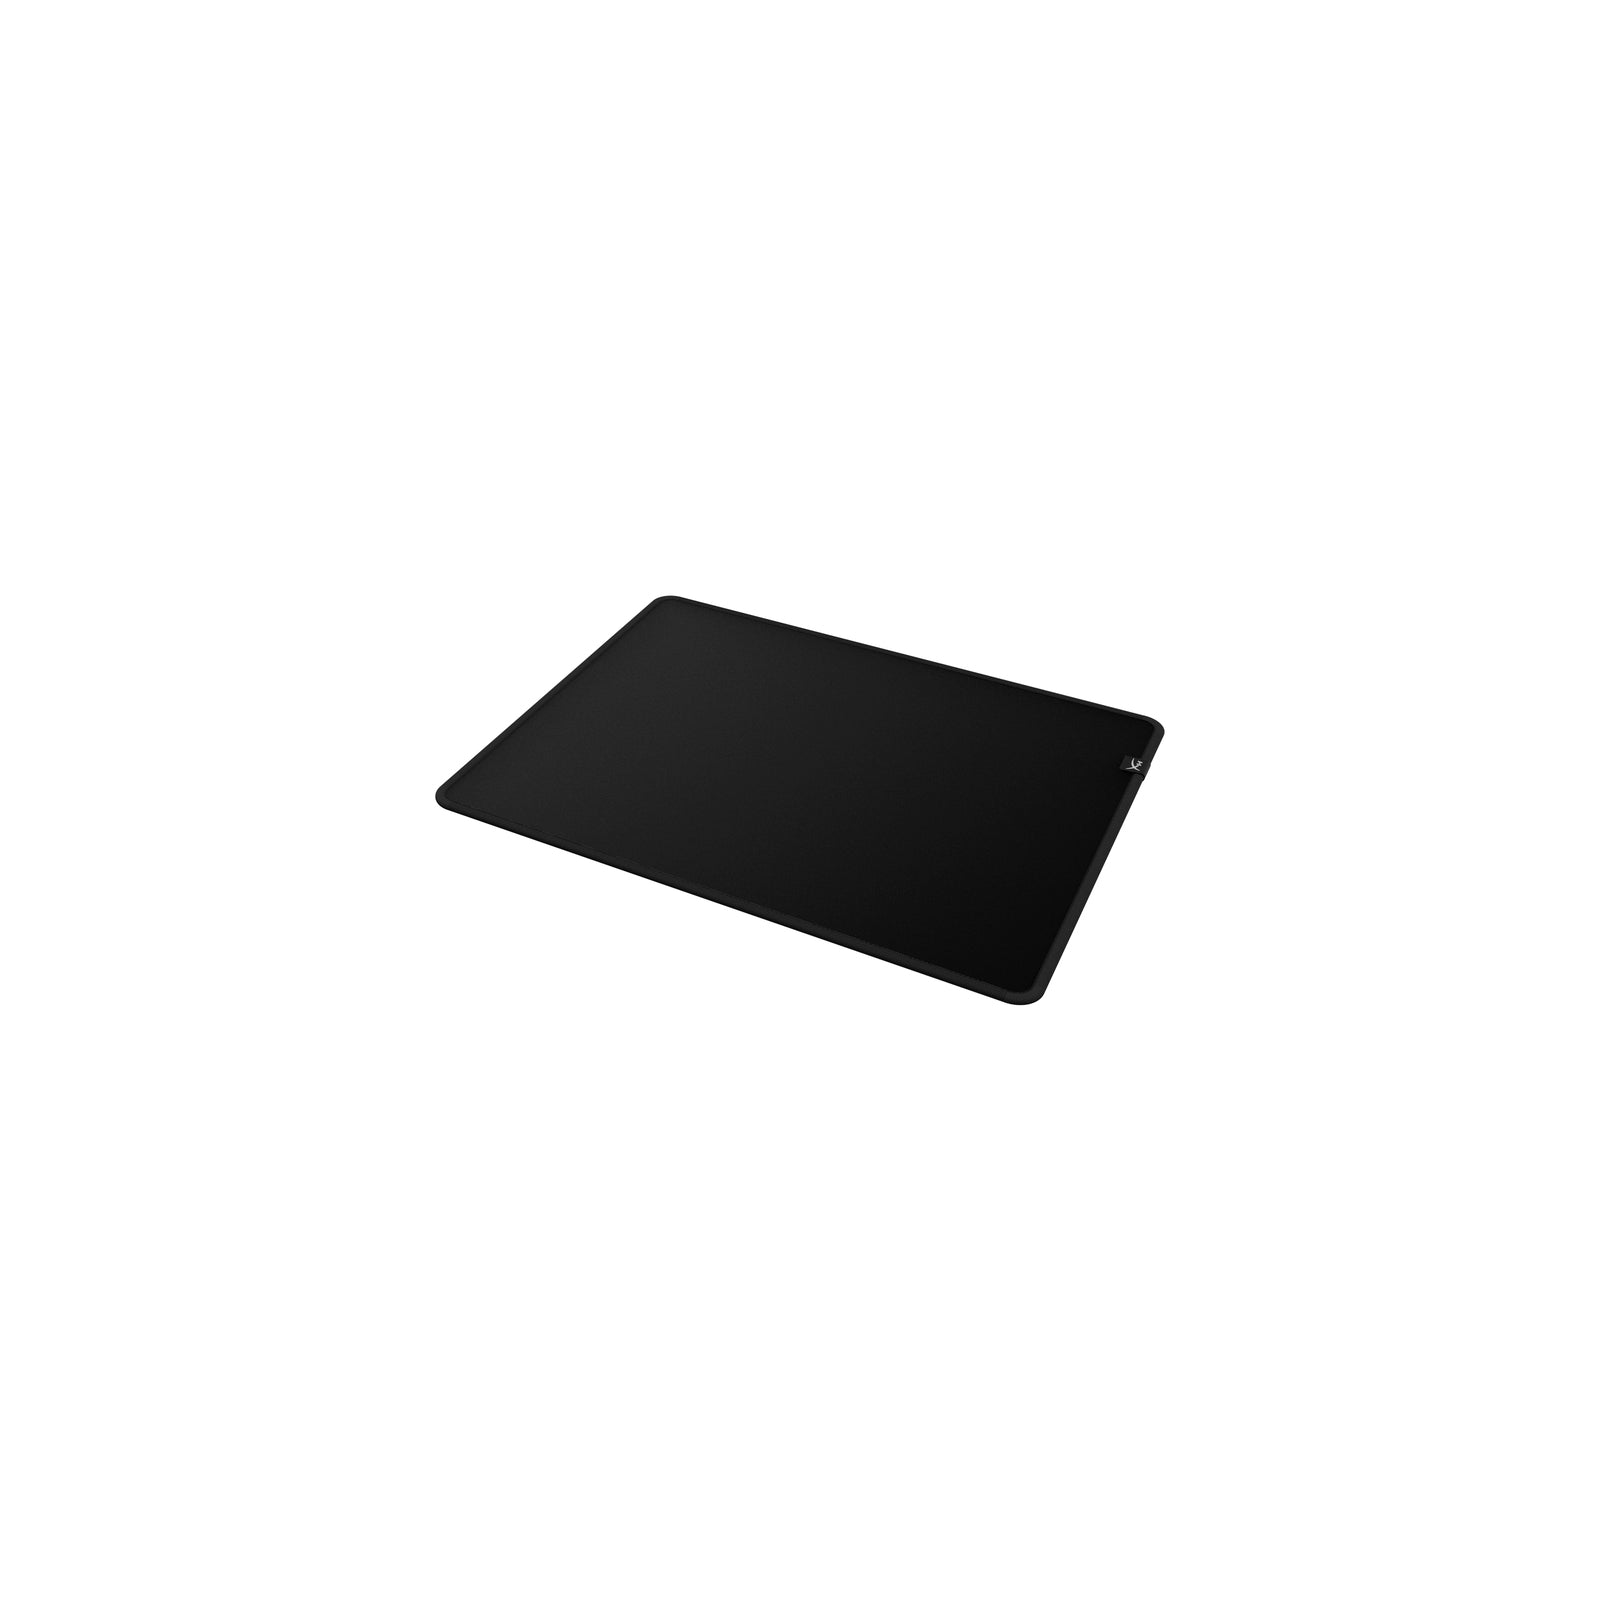 HyperX Pulsefire Mat - RGB Gaming Mousepad - Cloth (XL)